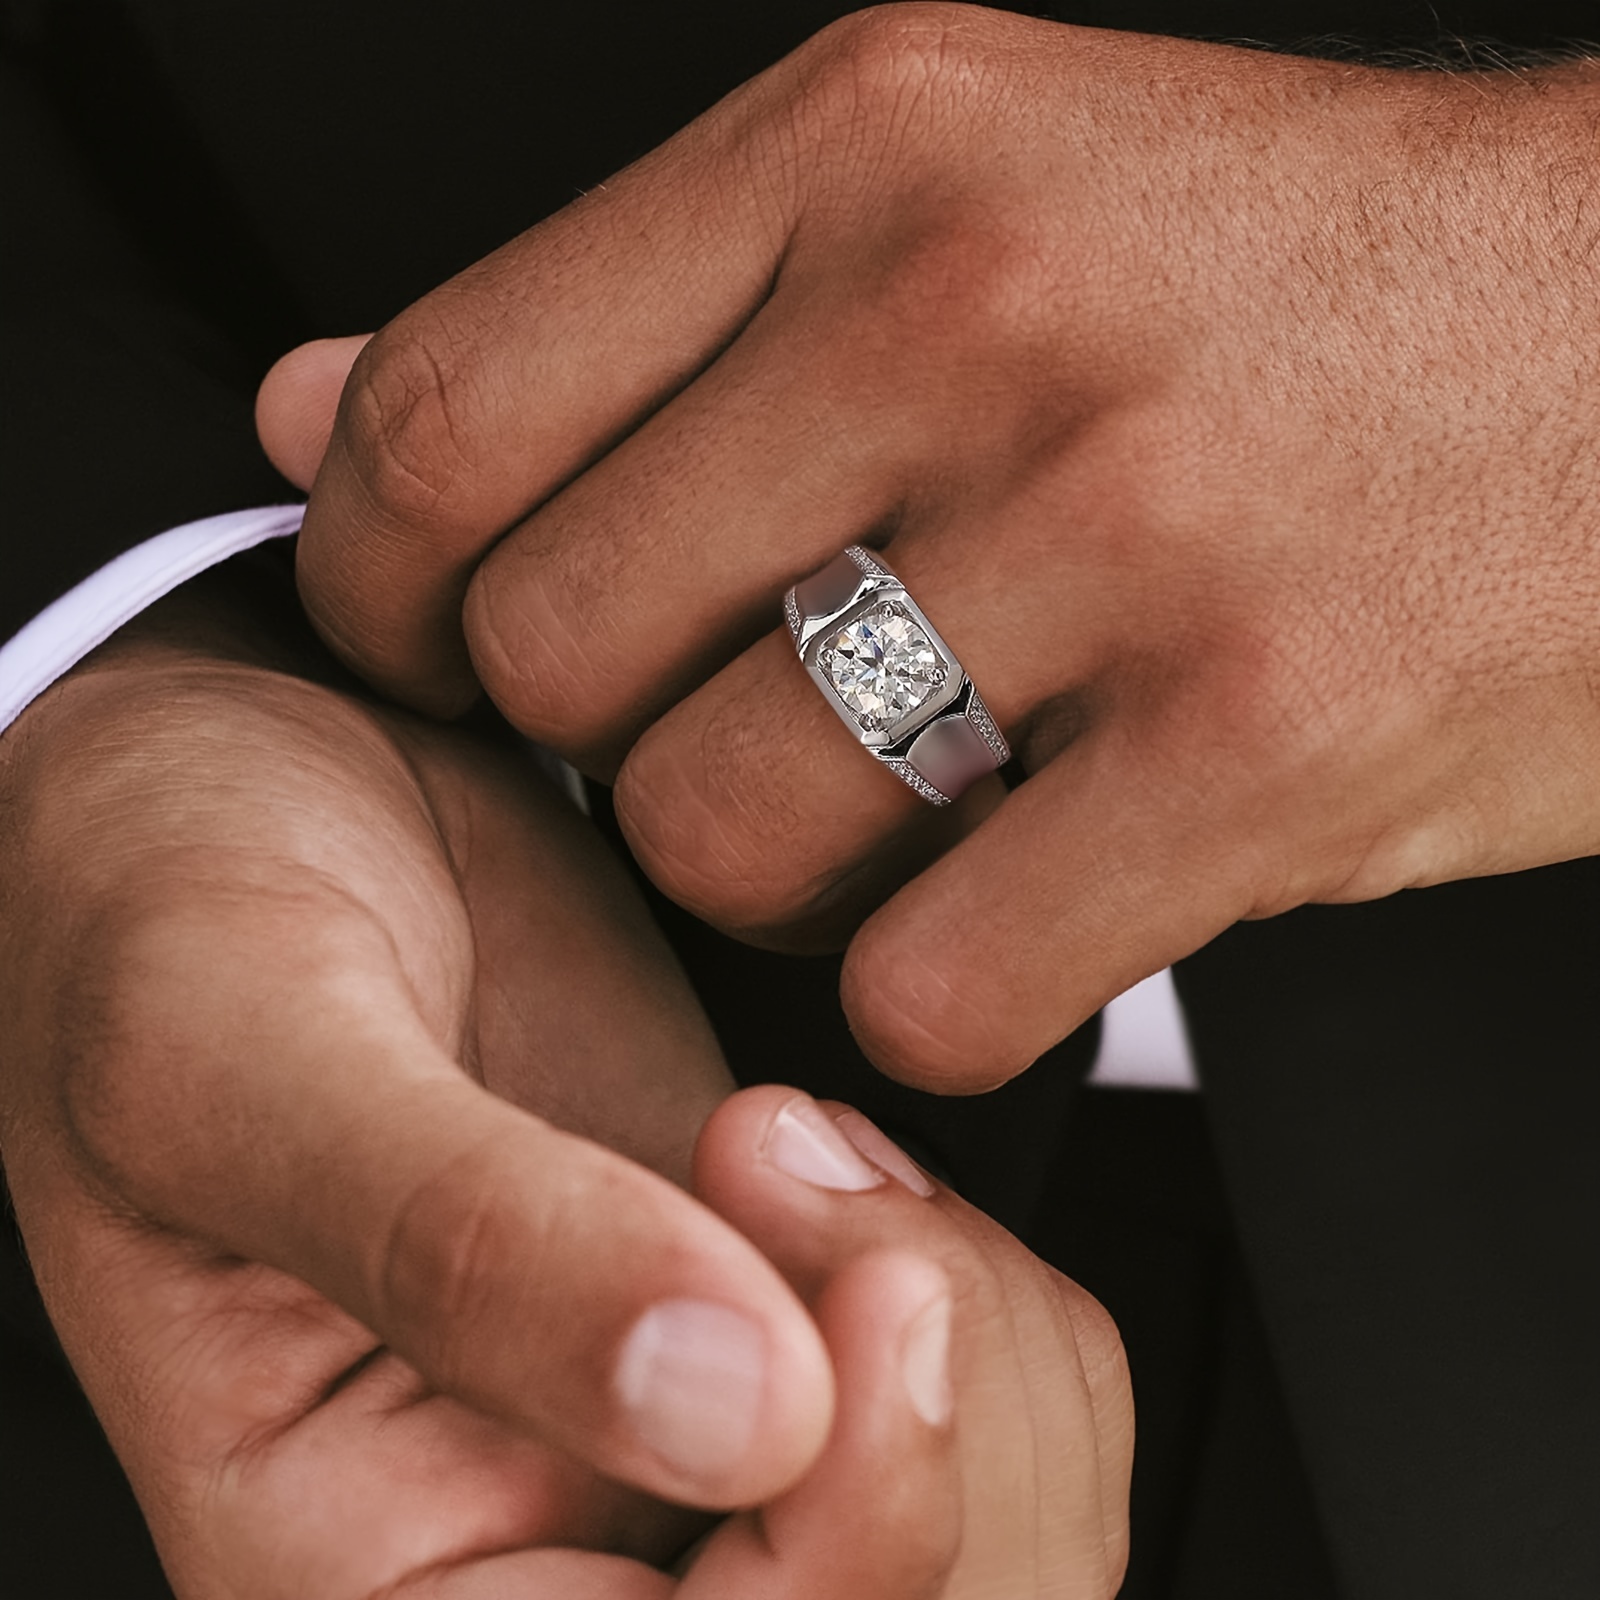 Large Fake Diamond Rings | 8 Carat Large Fake Engagement Ring | Emerald Cut CZ Stone | 925 Sterling Silver | Luxuria Diamonds Jewelry Brand